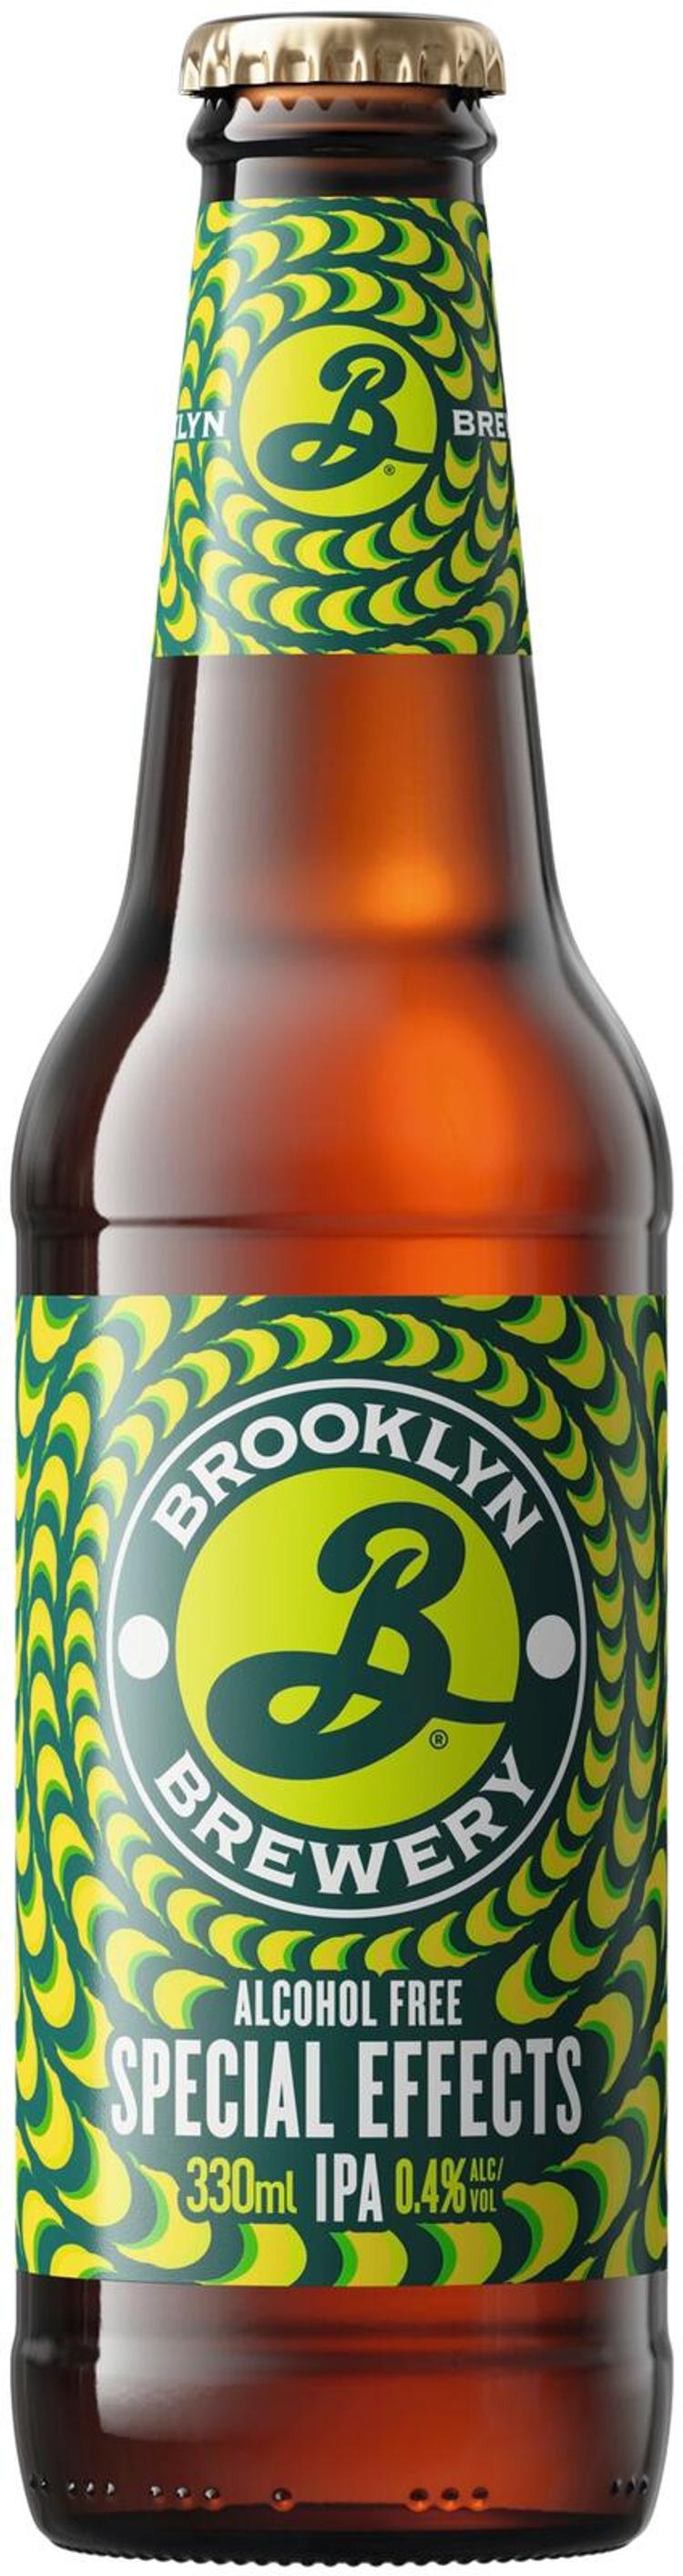 Brooklyn Special Effects IPA alkoholiton olut 0,4 % lasipullo 0,33 L